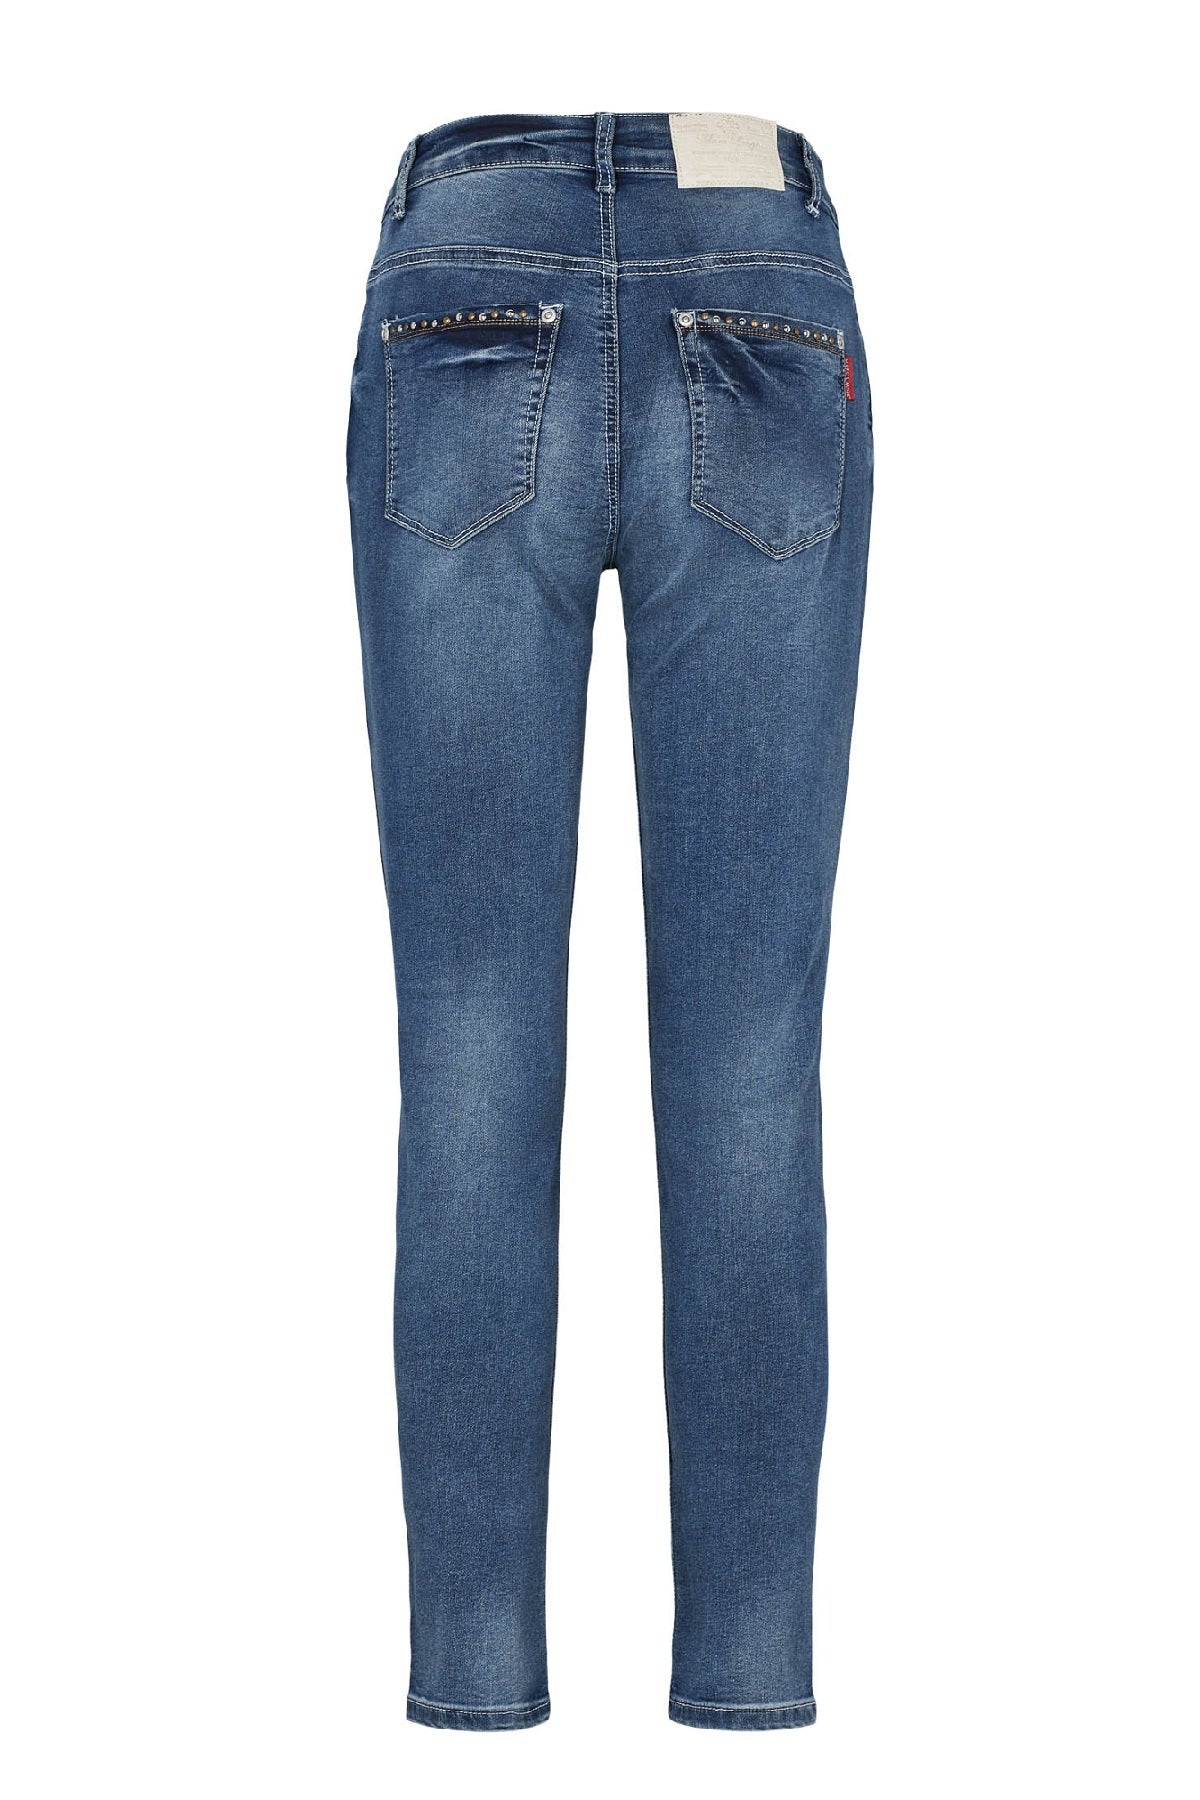 Marc Lauge Alberta Denim Jeans, Dark Blue Used